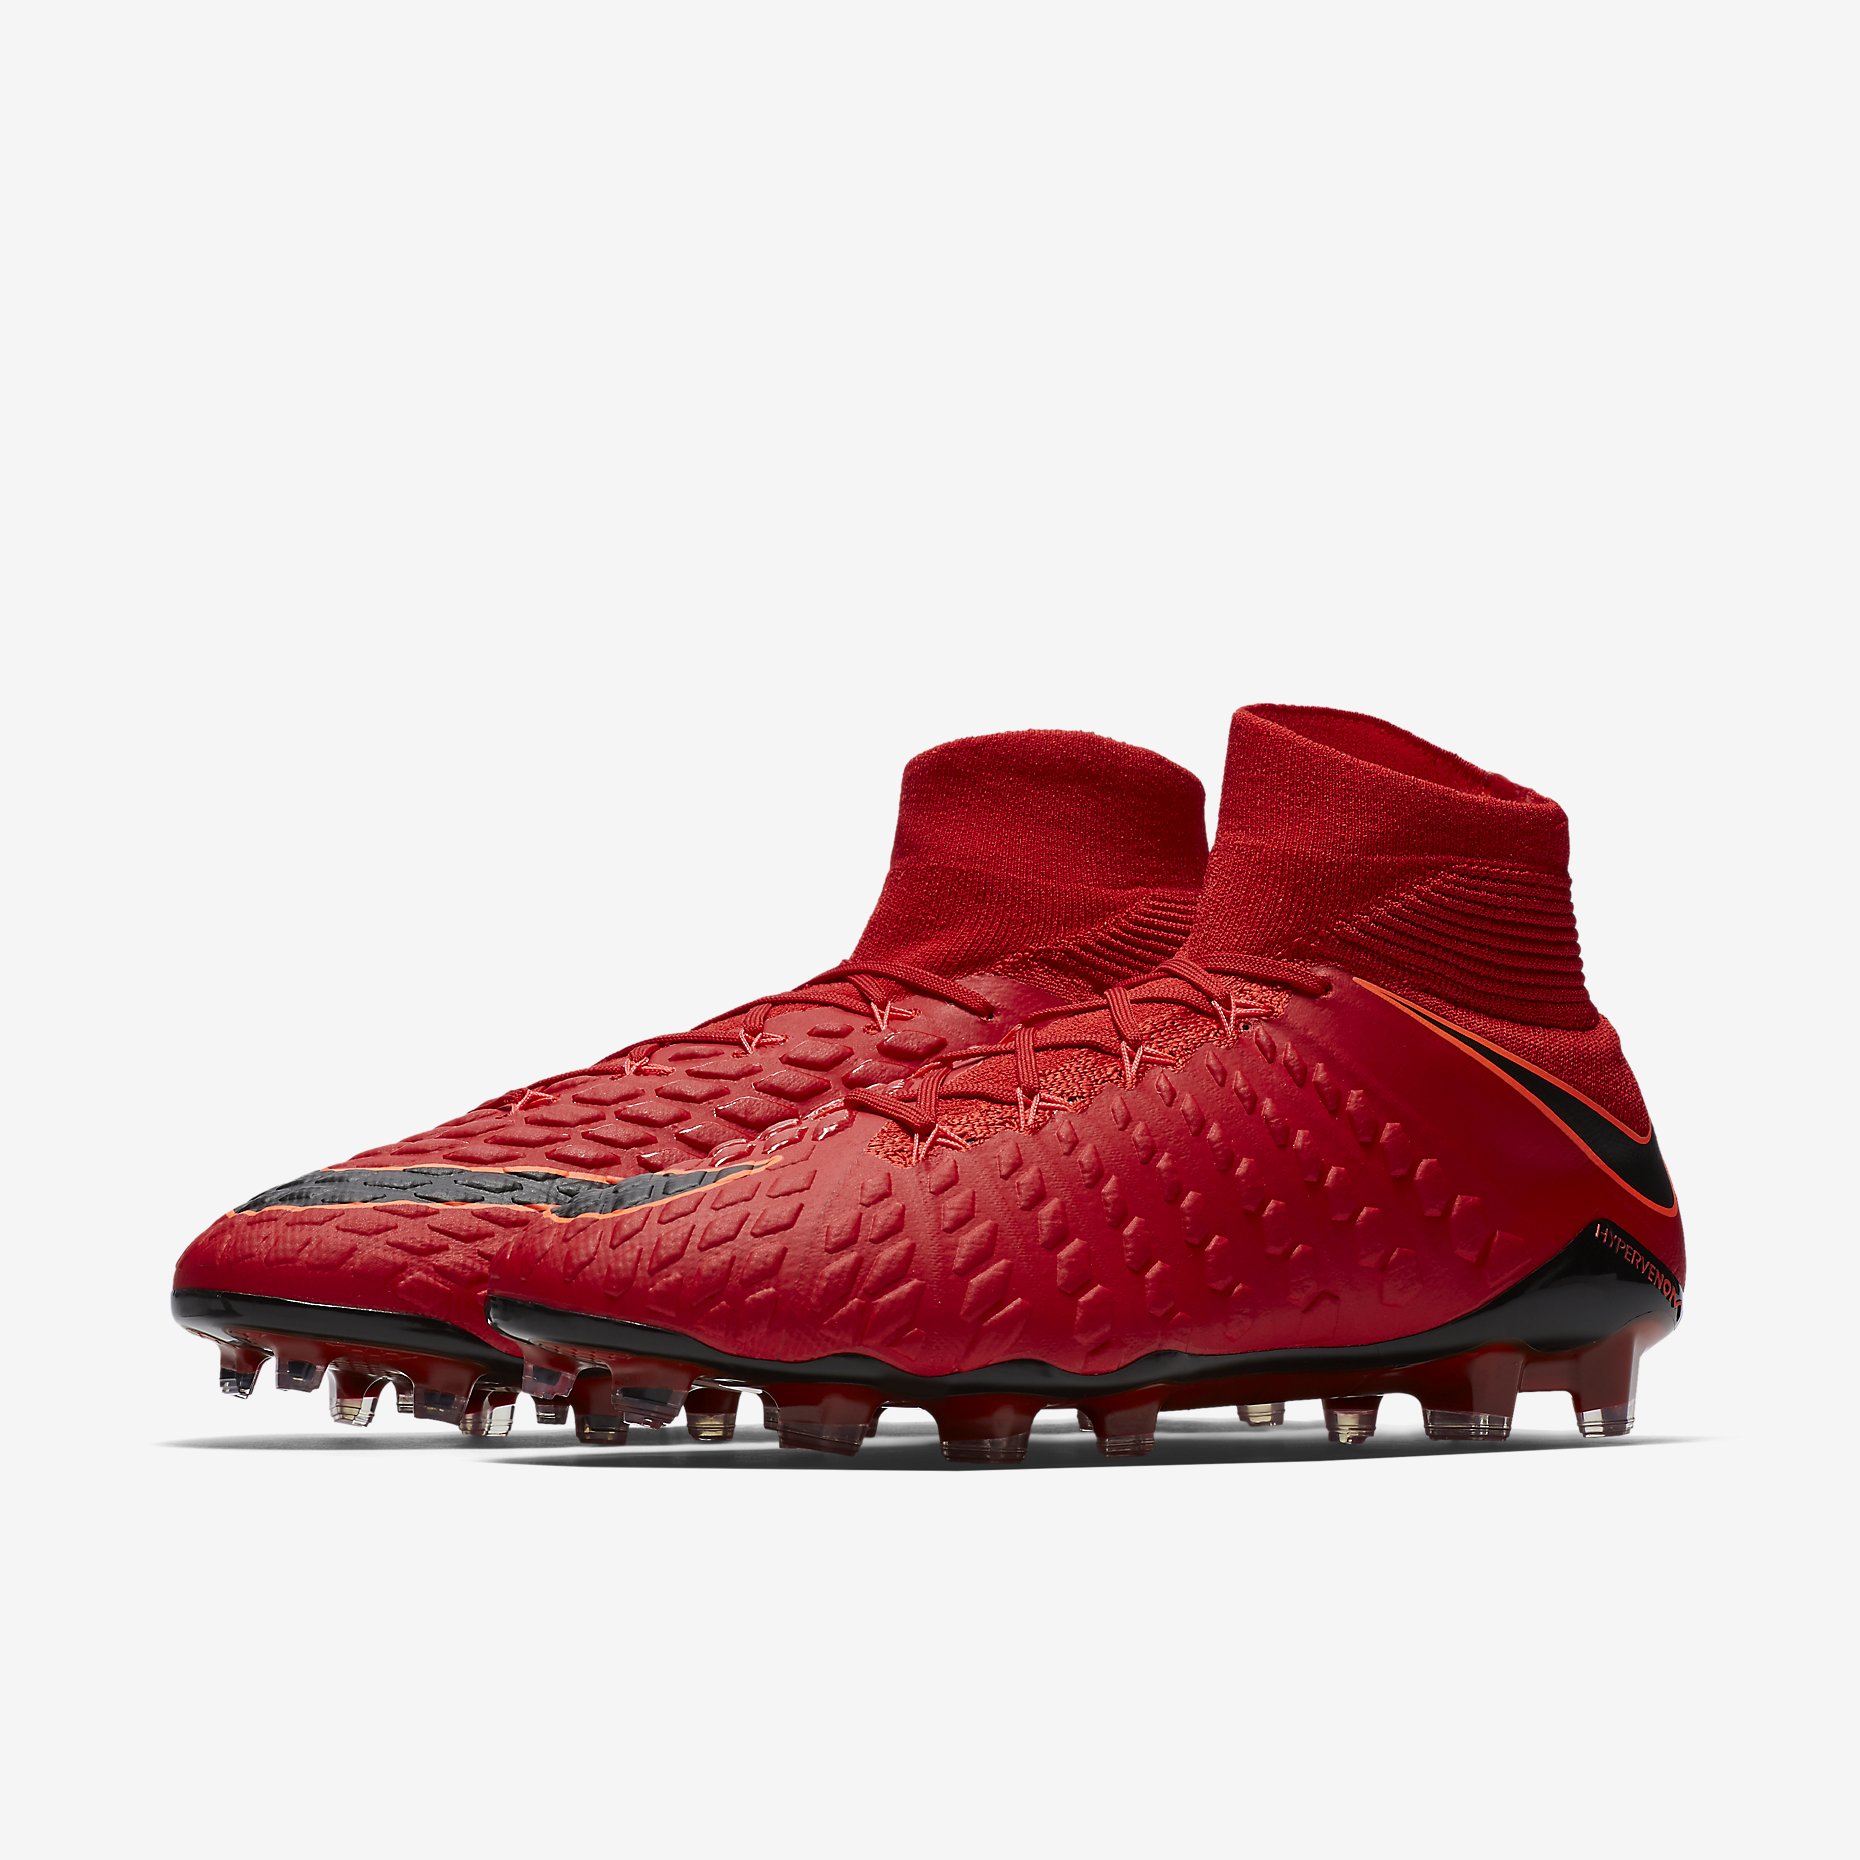 Nike Hypervenom Phantom 3 DF FG Fire & Ice - University Red / Bright Crimson Black - Shirt Culture - Latest Football Kit News and More